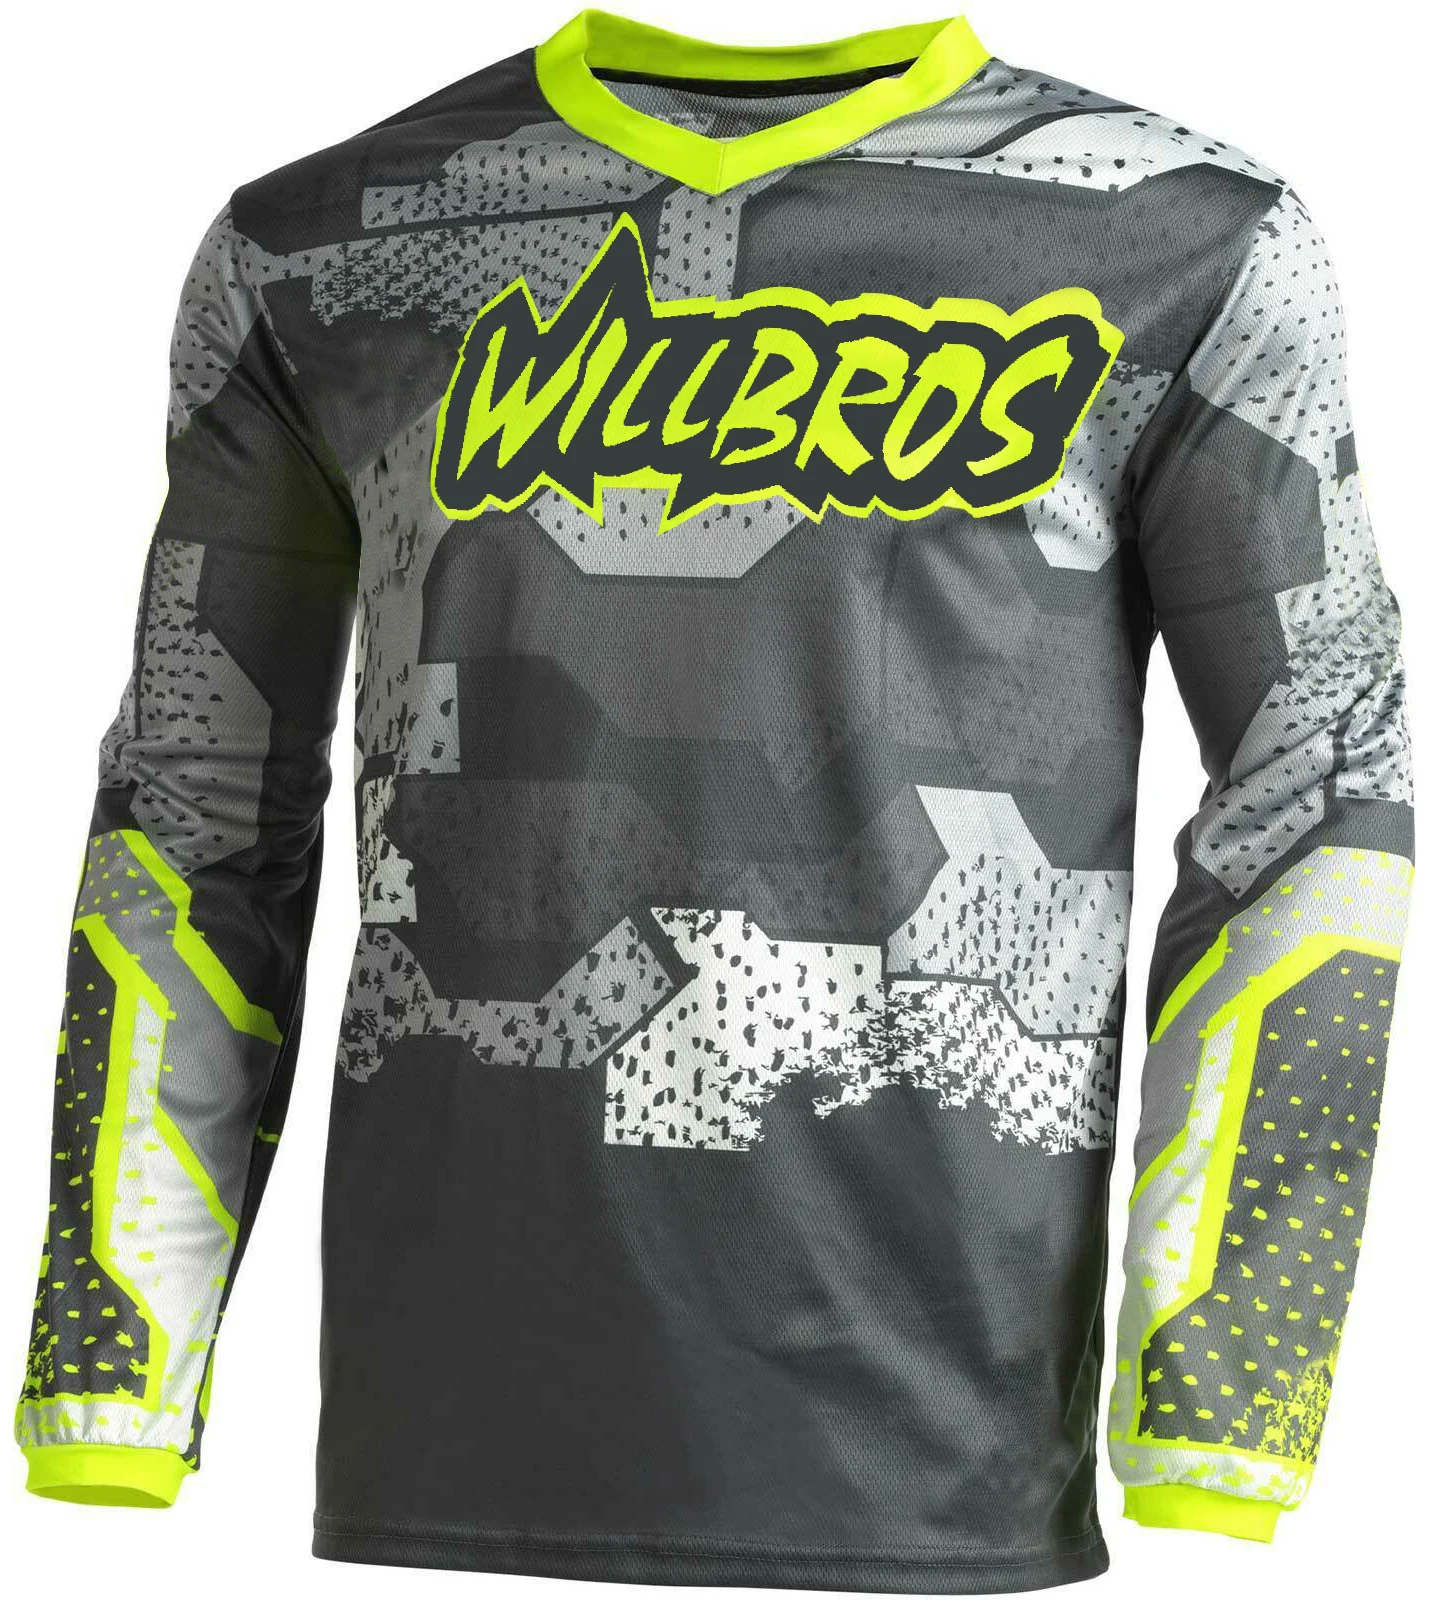 

Downhill Bike Cycling Jersey Willbros Motocross Racing Long Sleeve Enduro MX BMX DH Dirt Bicycle Moto Cross Summer T-shirt Mens